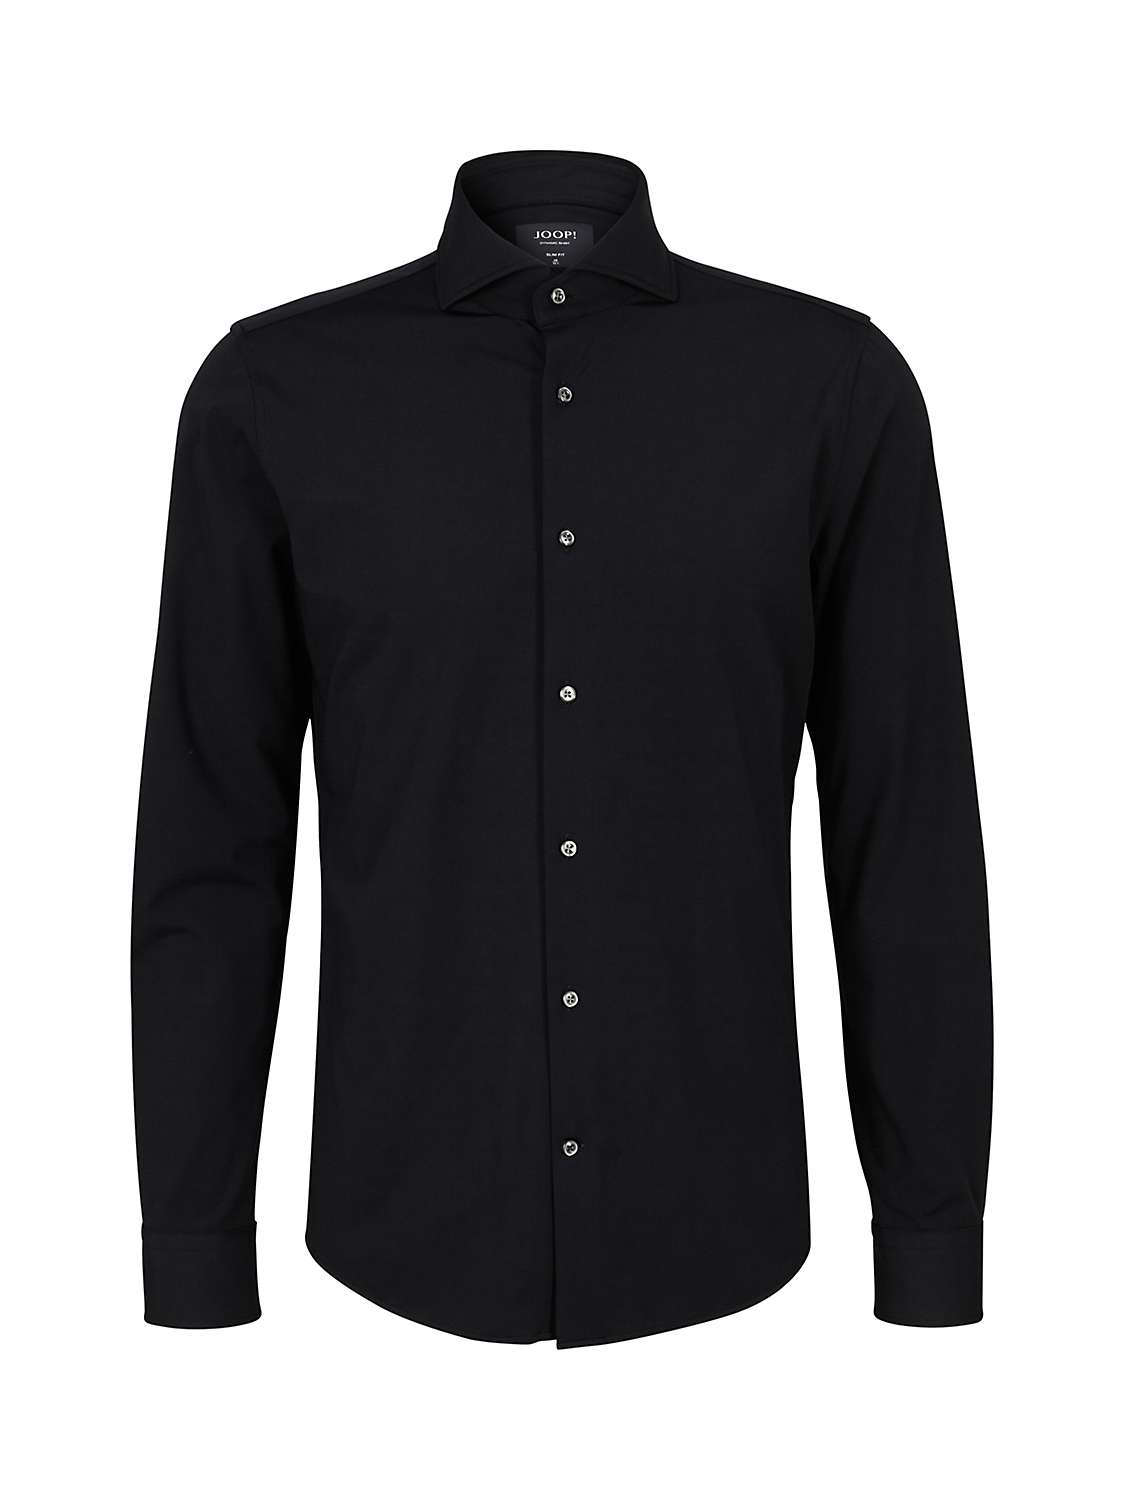 JOOP! Pai Long Sleeve Shirt, Black at John Lewis & Partners